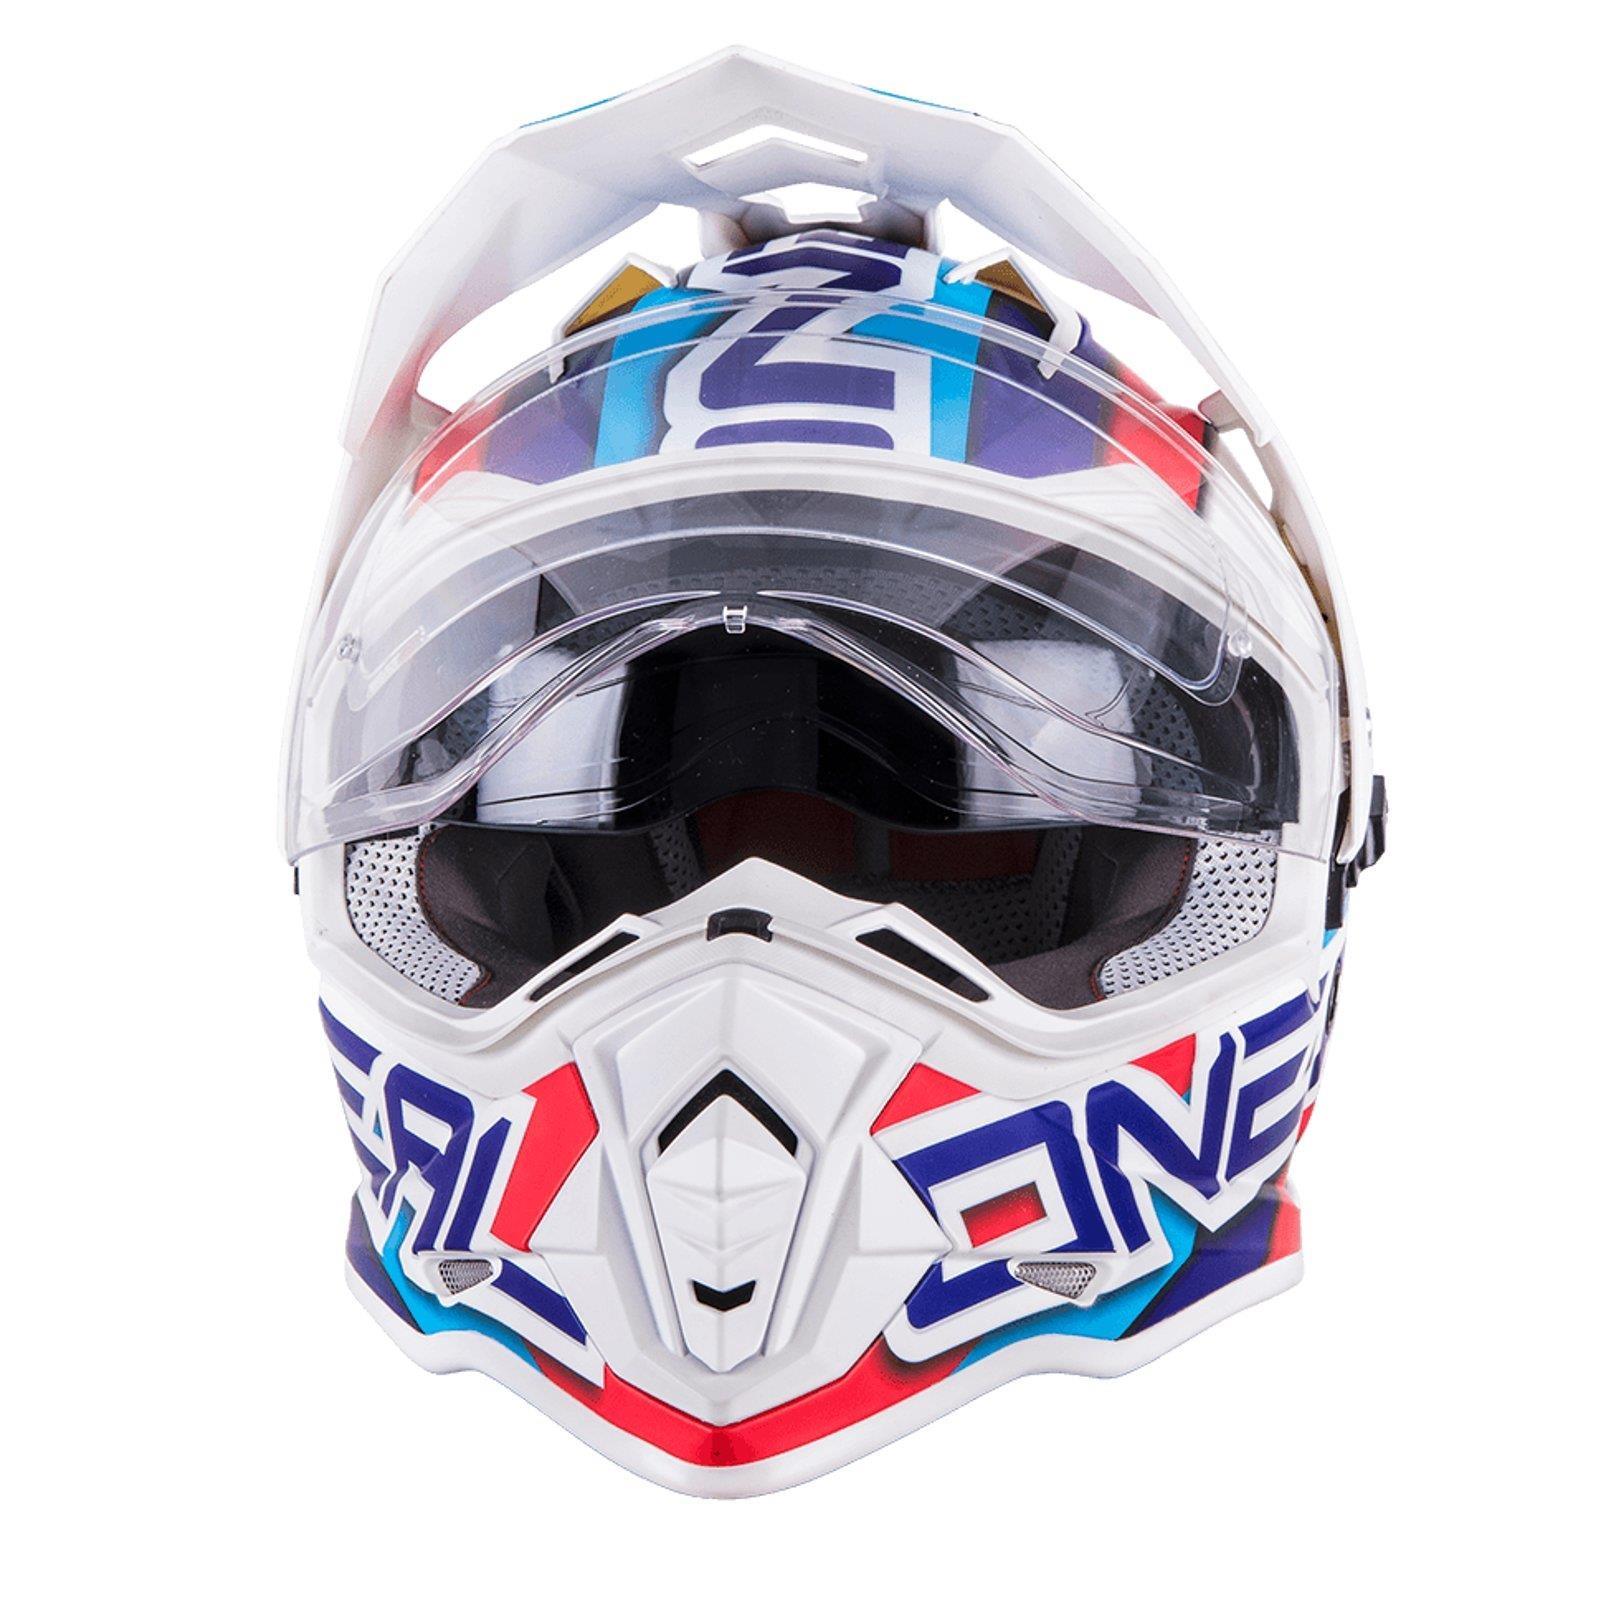 O'Neal SIERRA II Helmet Slingshot Motorcycle Motocross MX Enduro Quad Offroad Cross | eBay